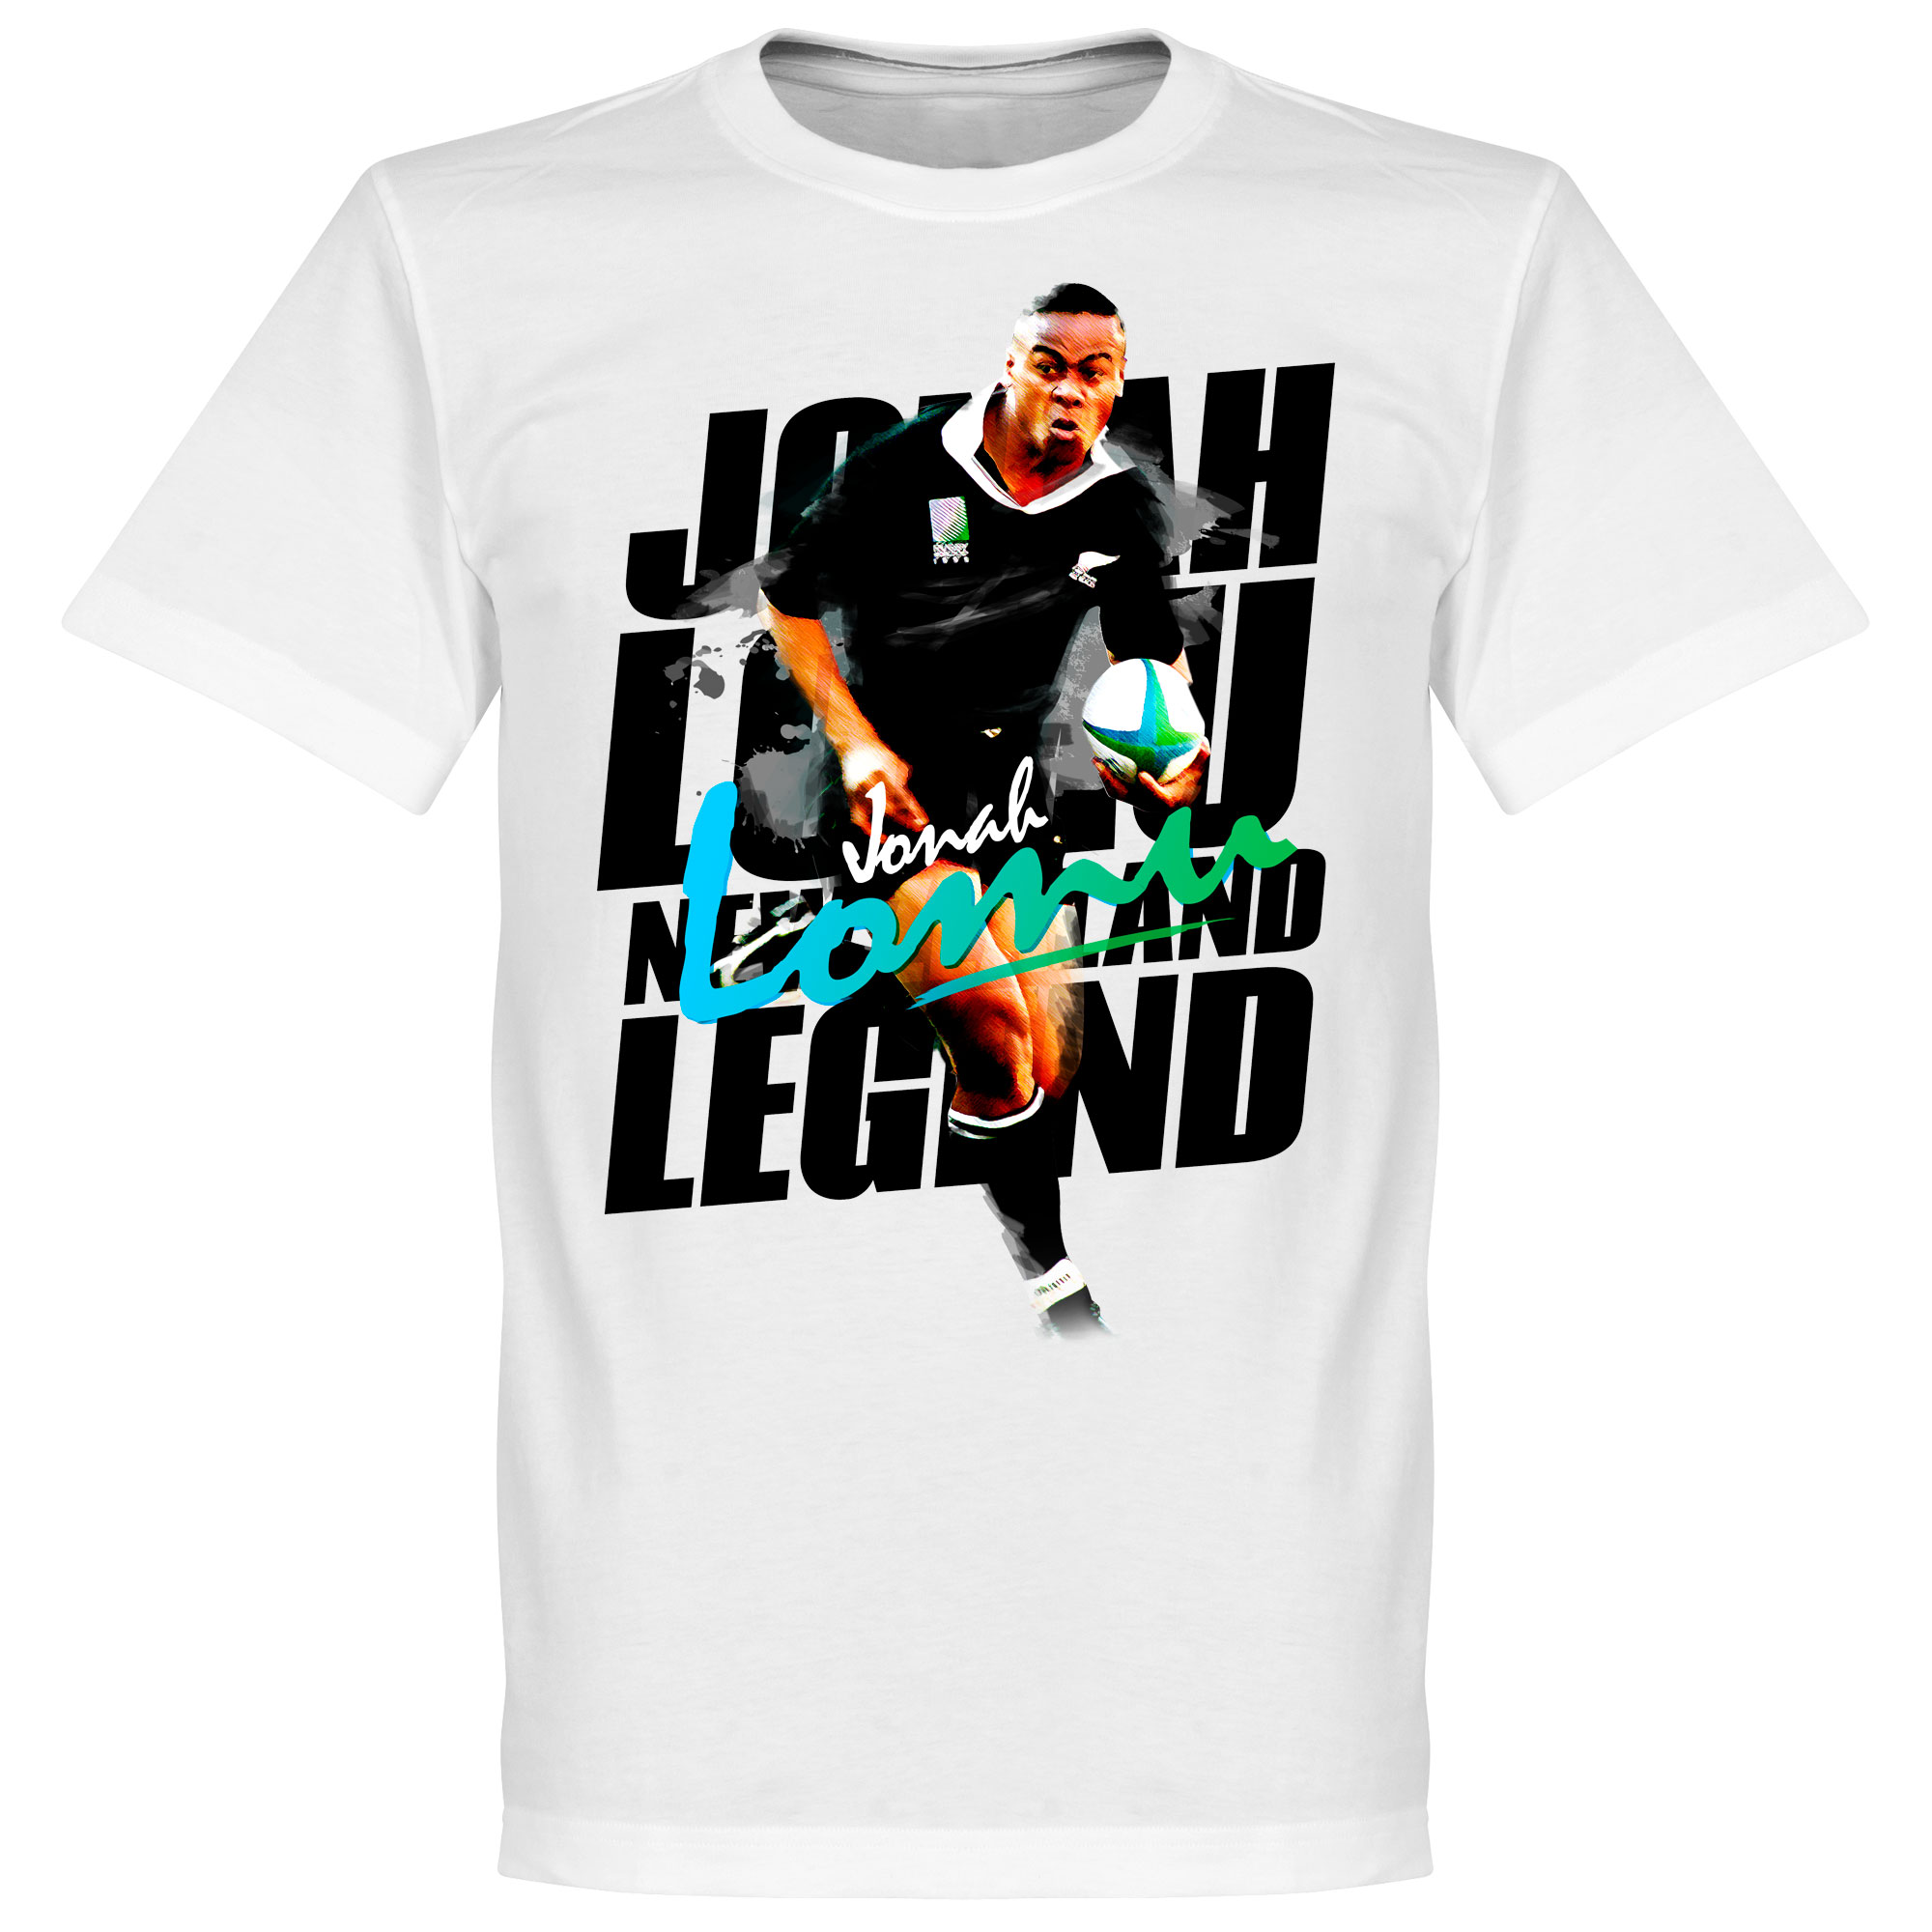 Jonah Lomu Legend T-Shirt S